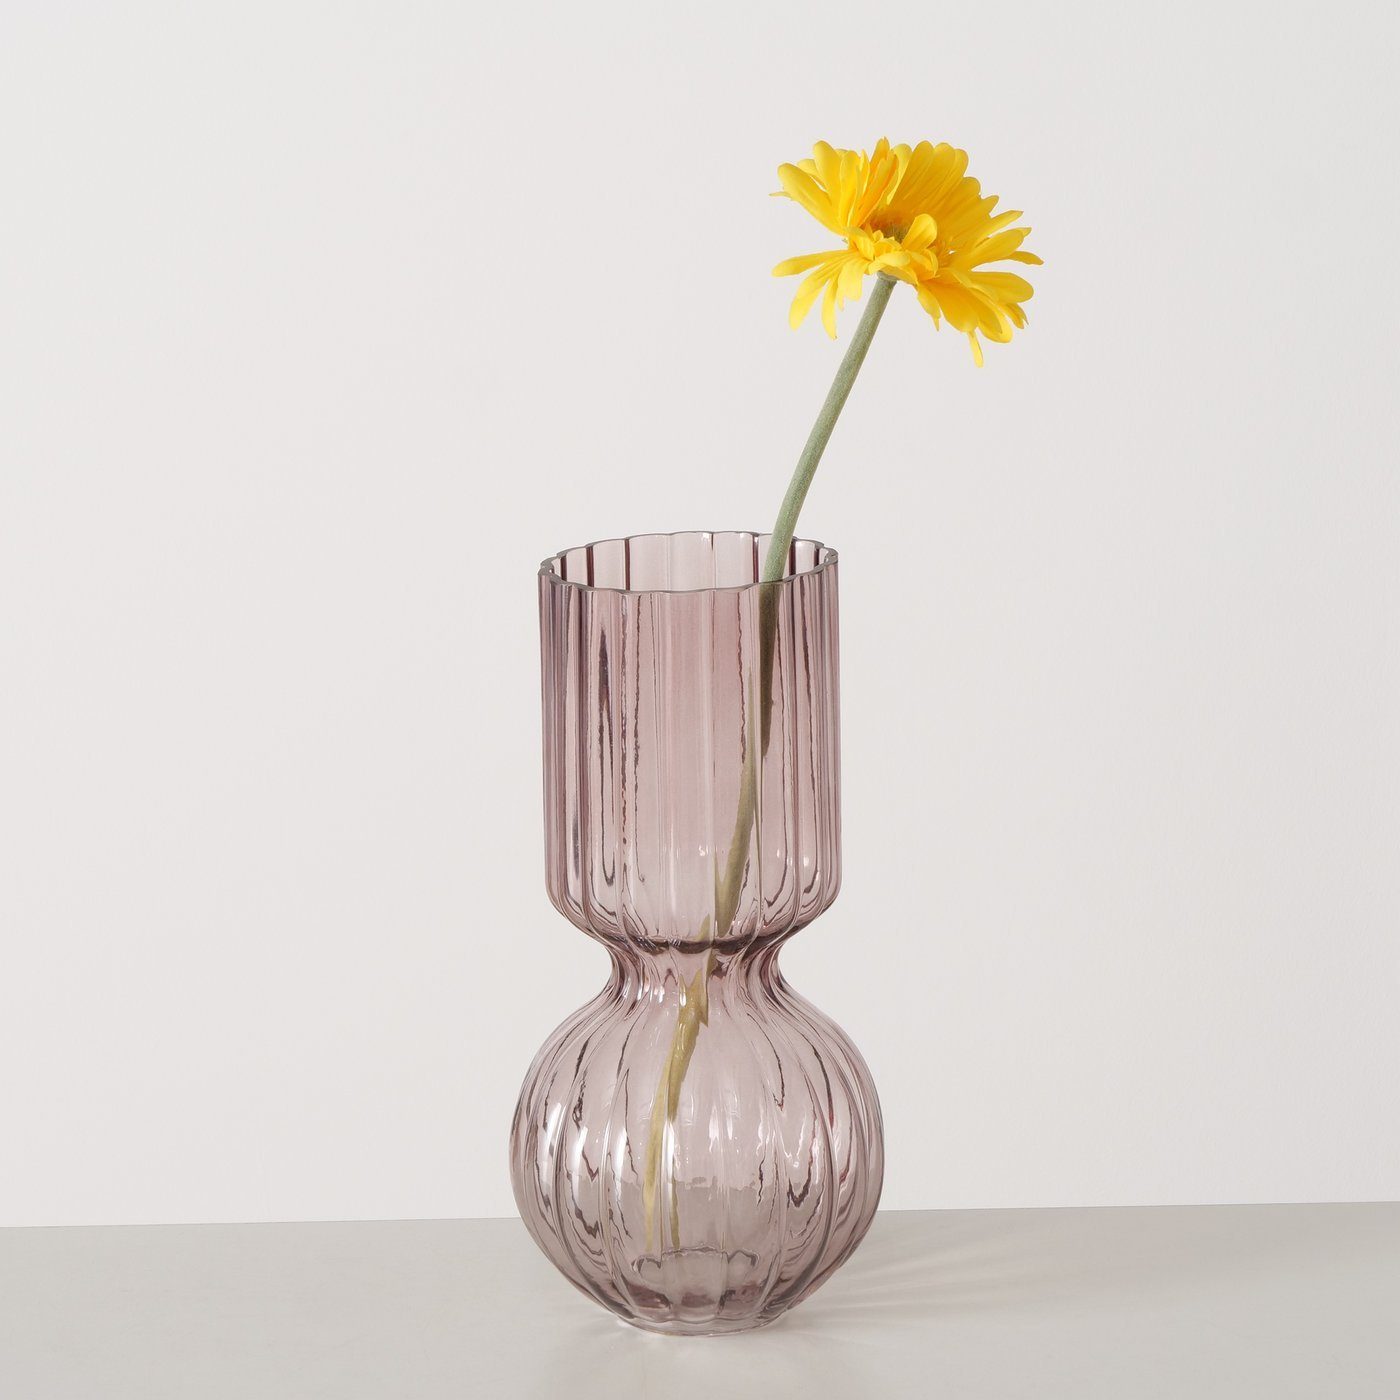 BOLTZE Dekovase "Kalea" Glas H30cm, in aus Vase dukelrosa